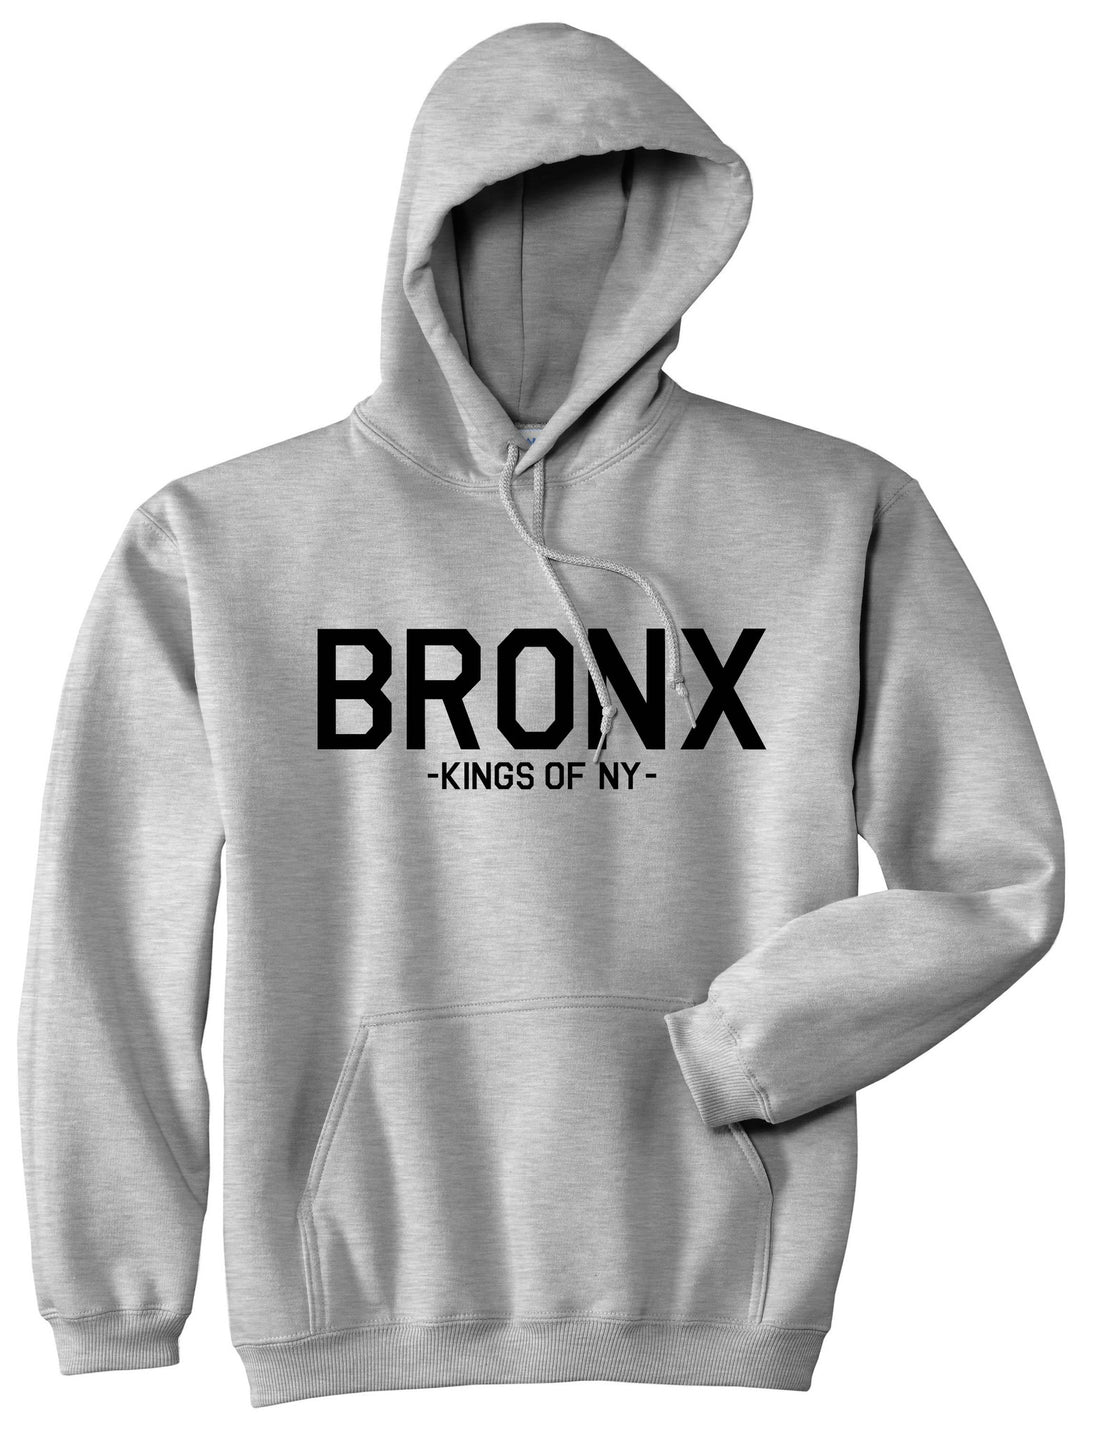 BRONX Boro Borough New York Pullover Hoodie Hoody in Grey